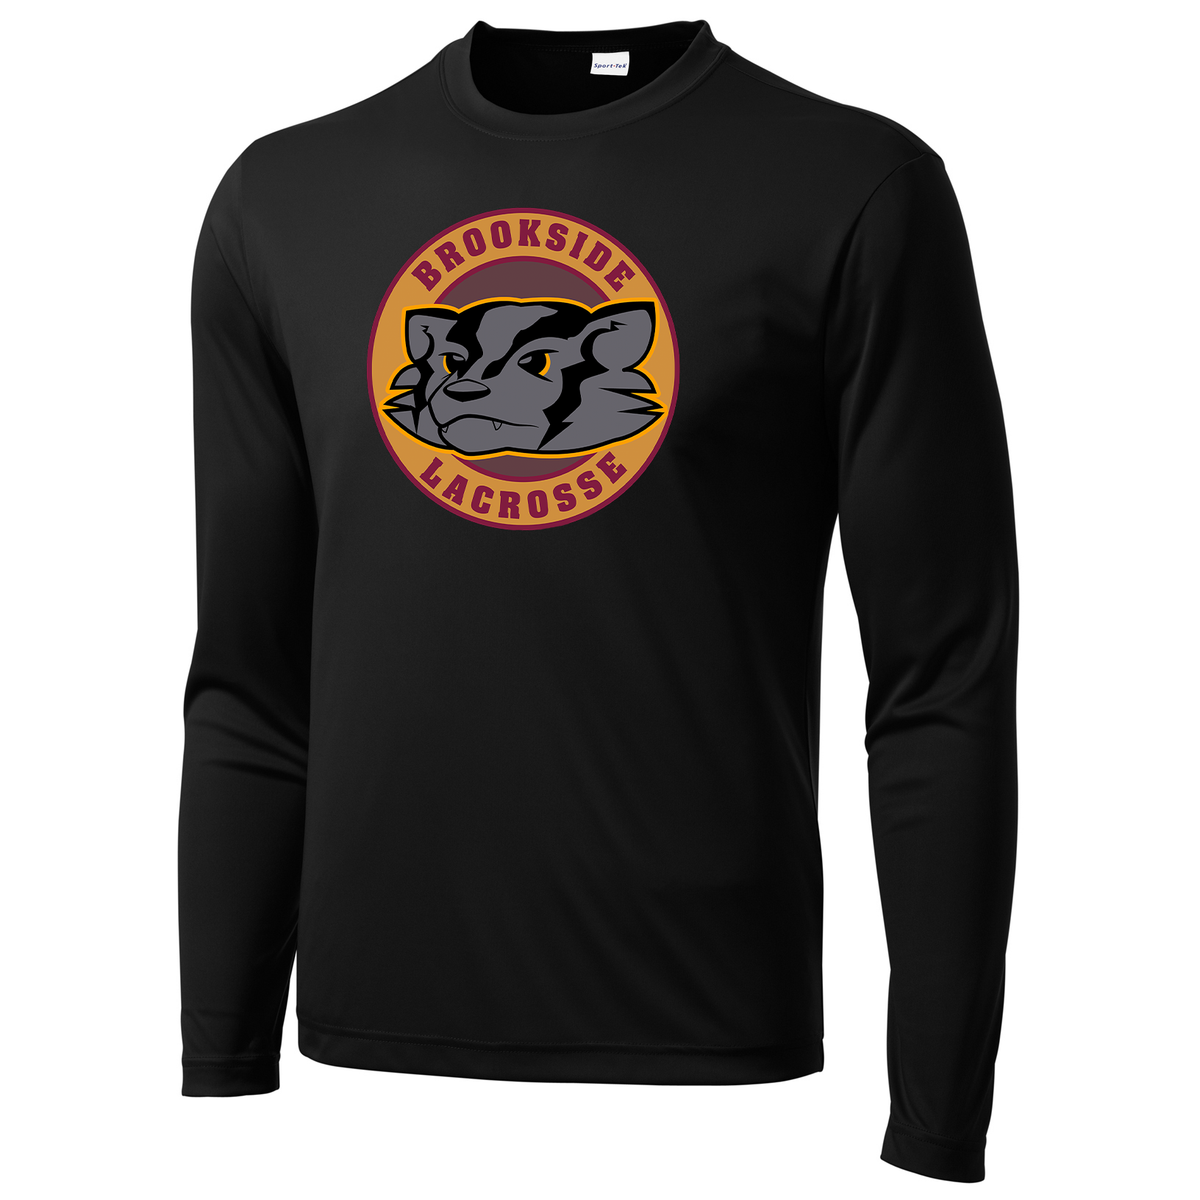 Brookside Lacrosse Long Sleeve Performance Shirt